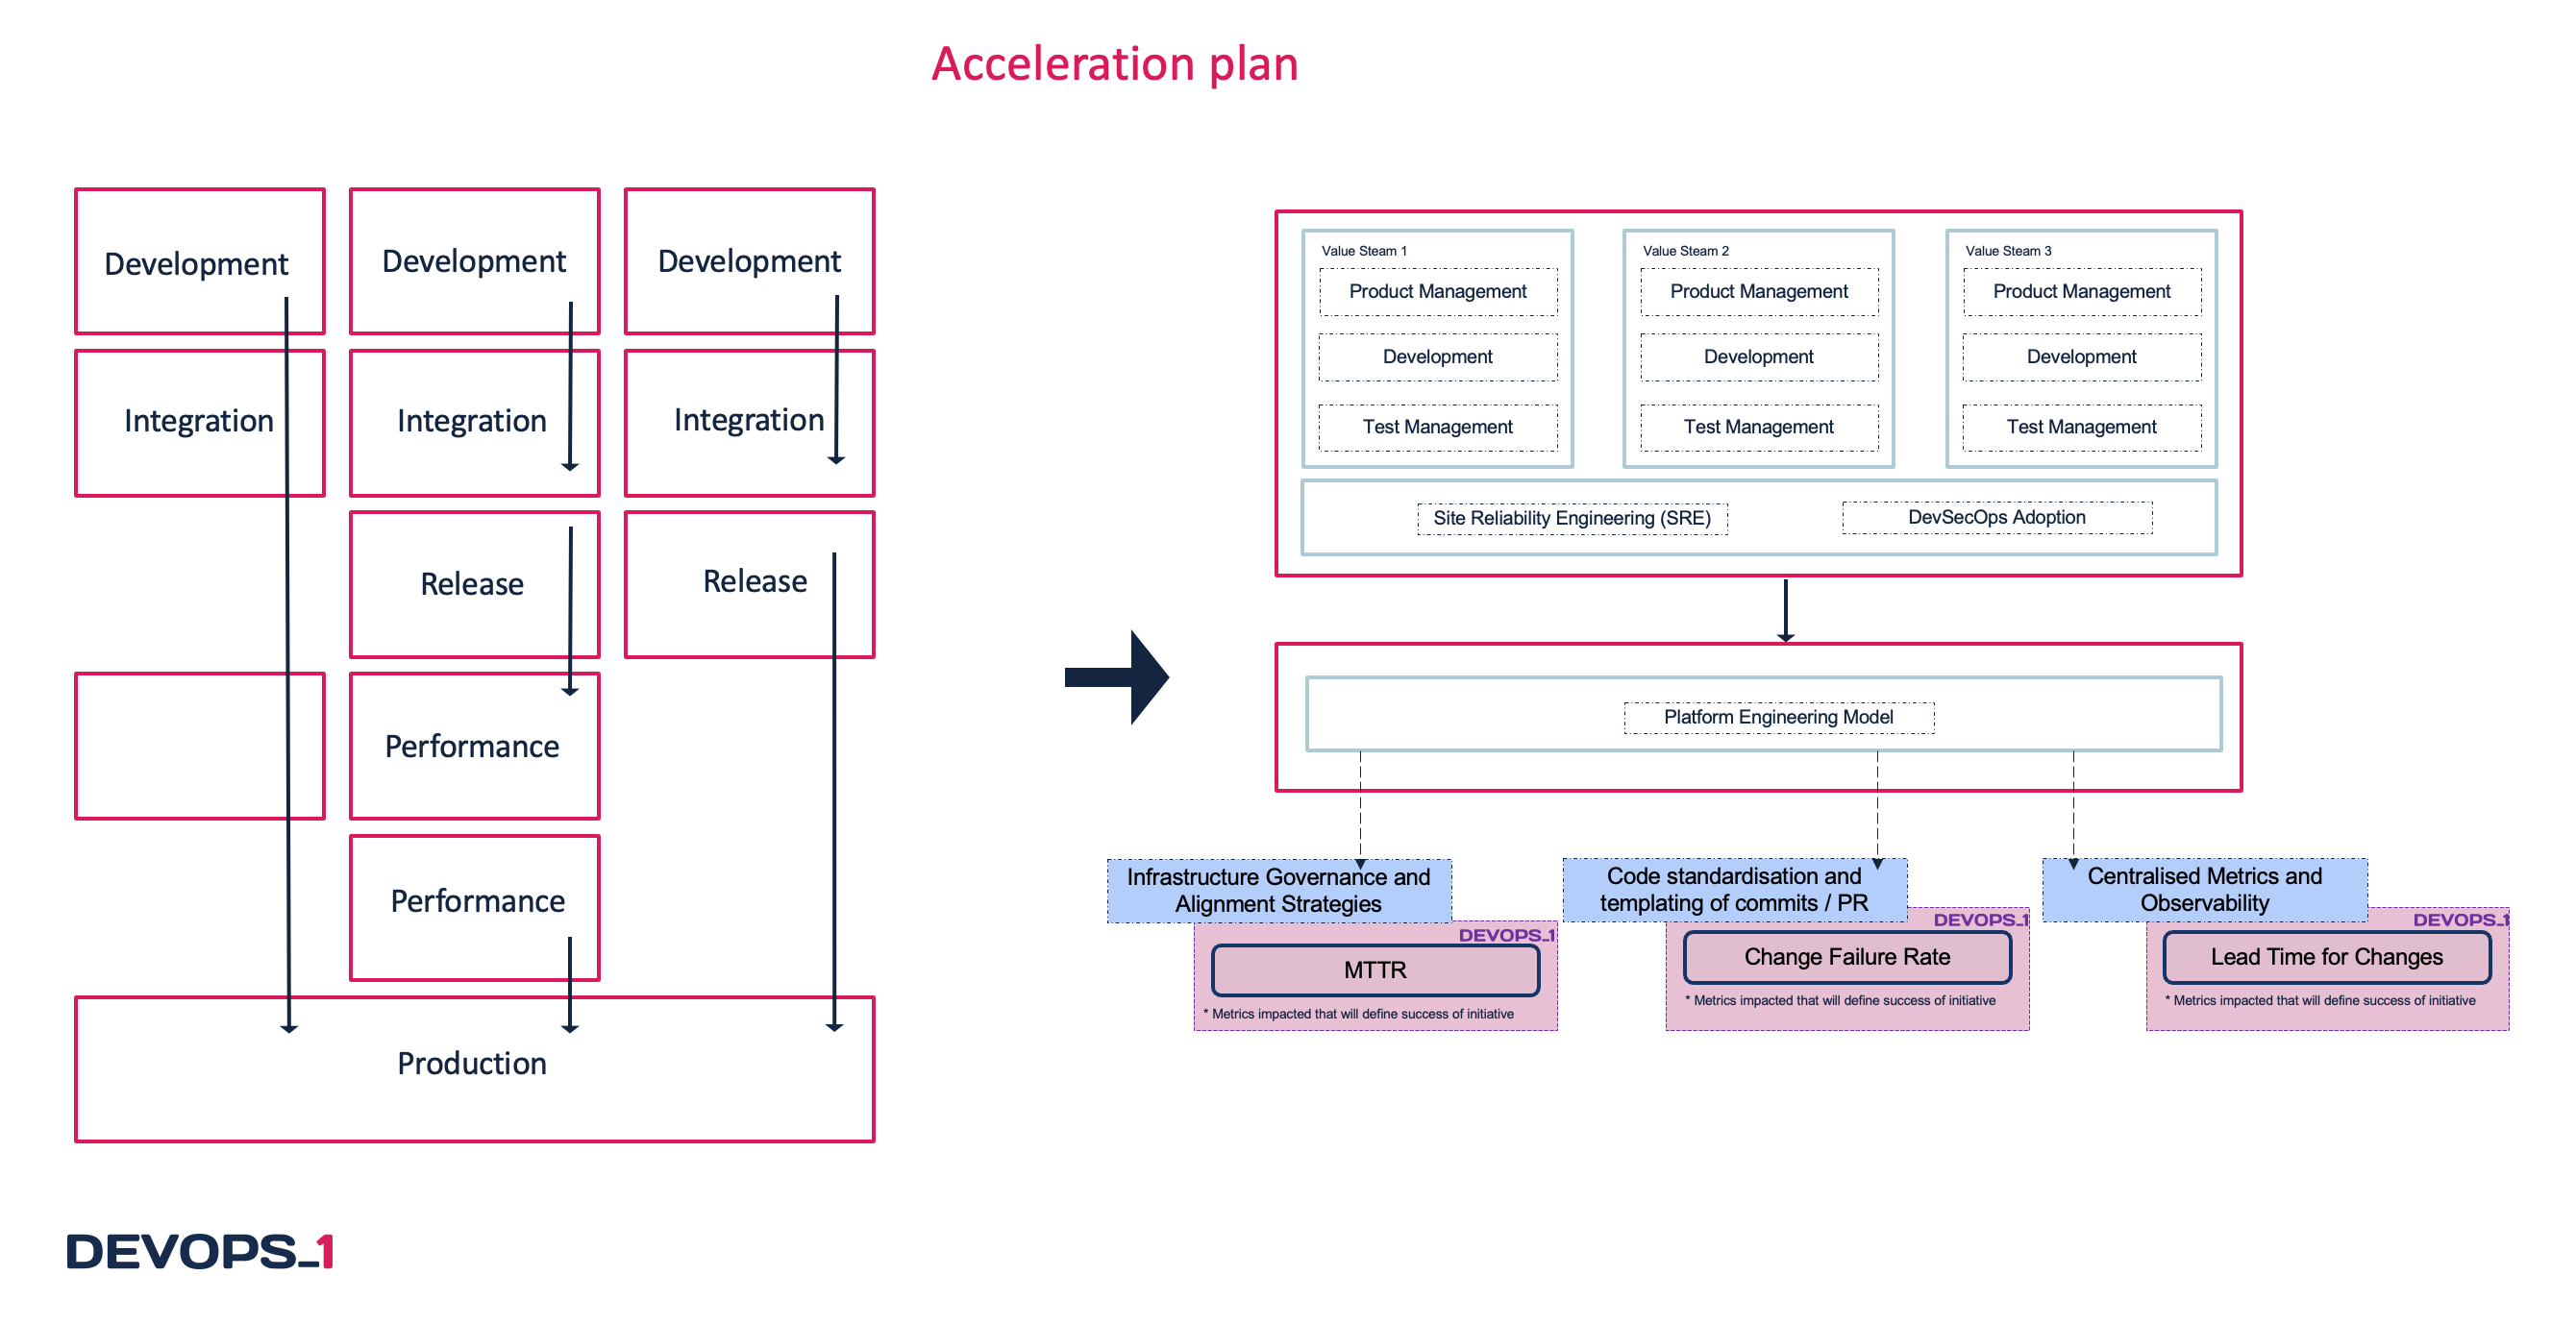 Acceleration plan